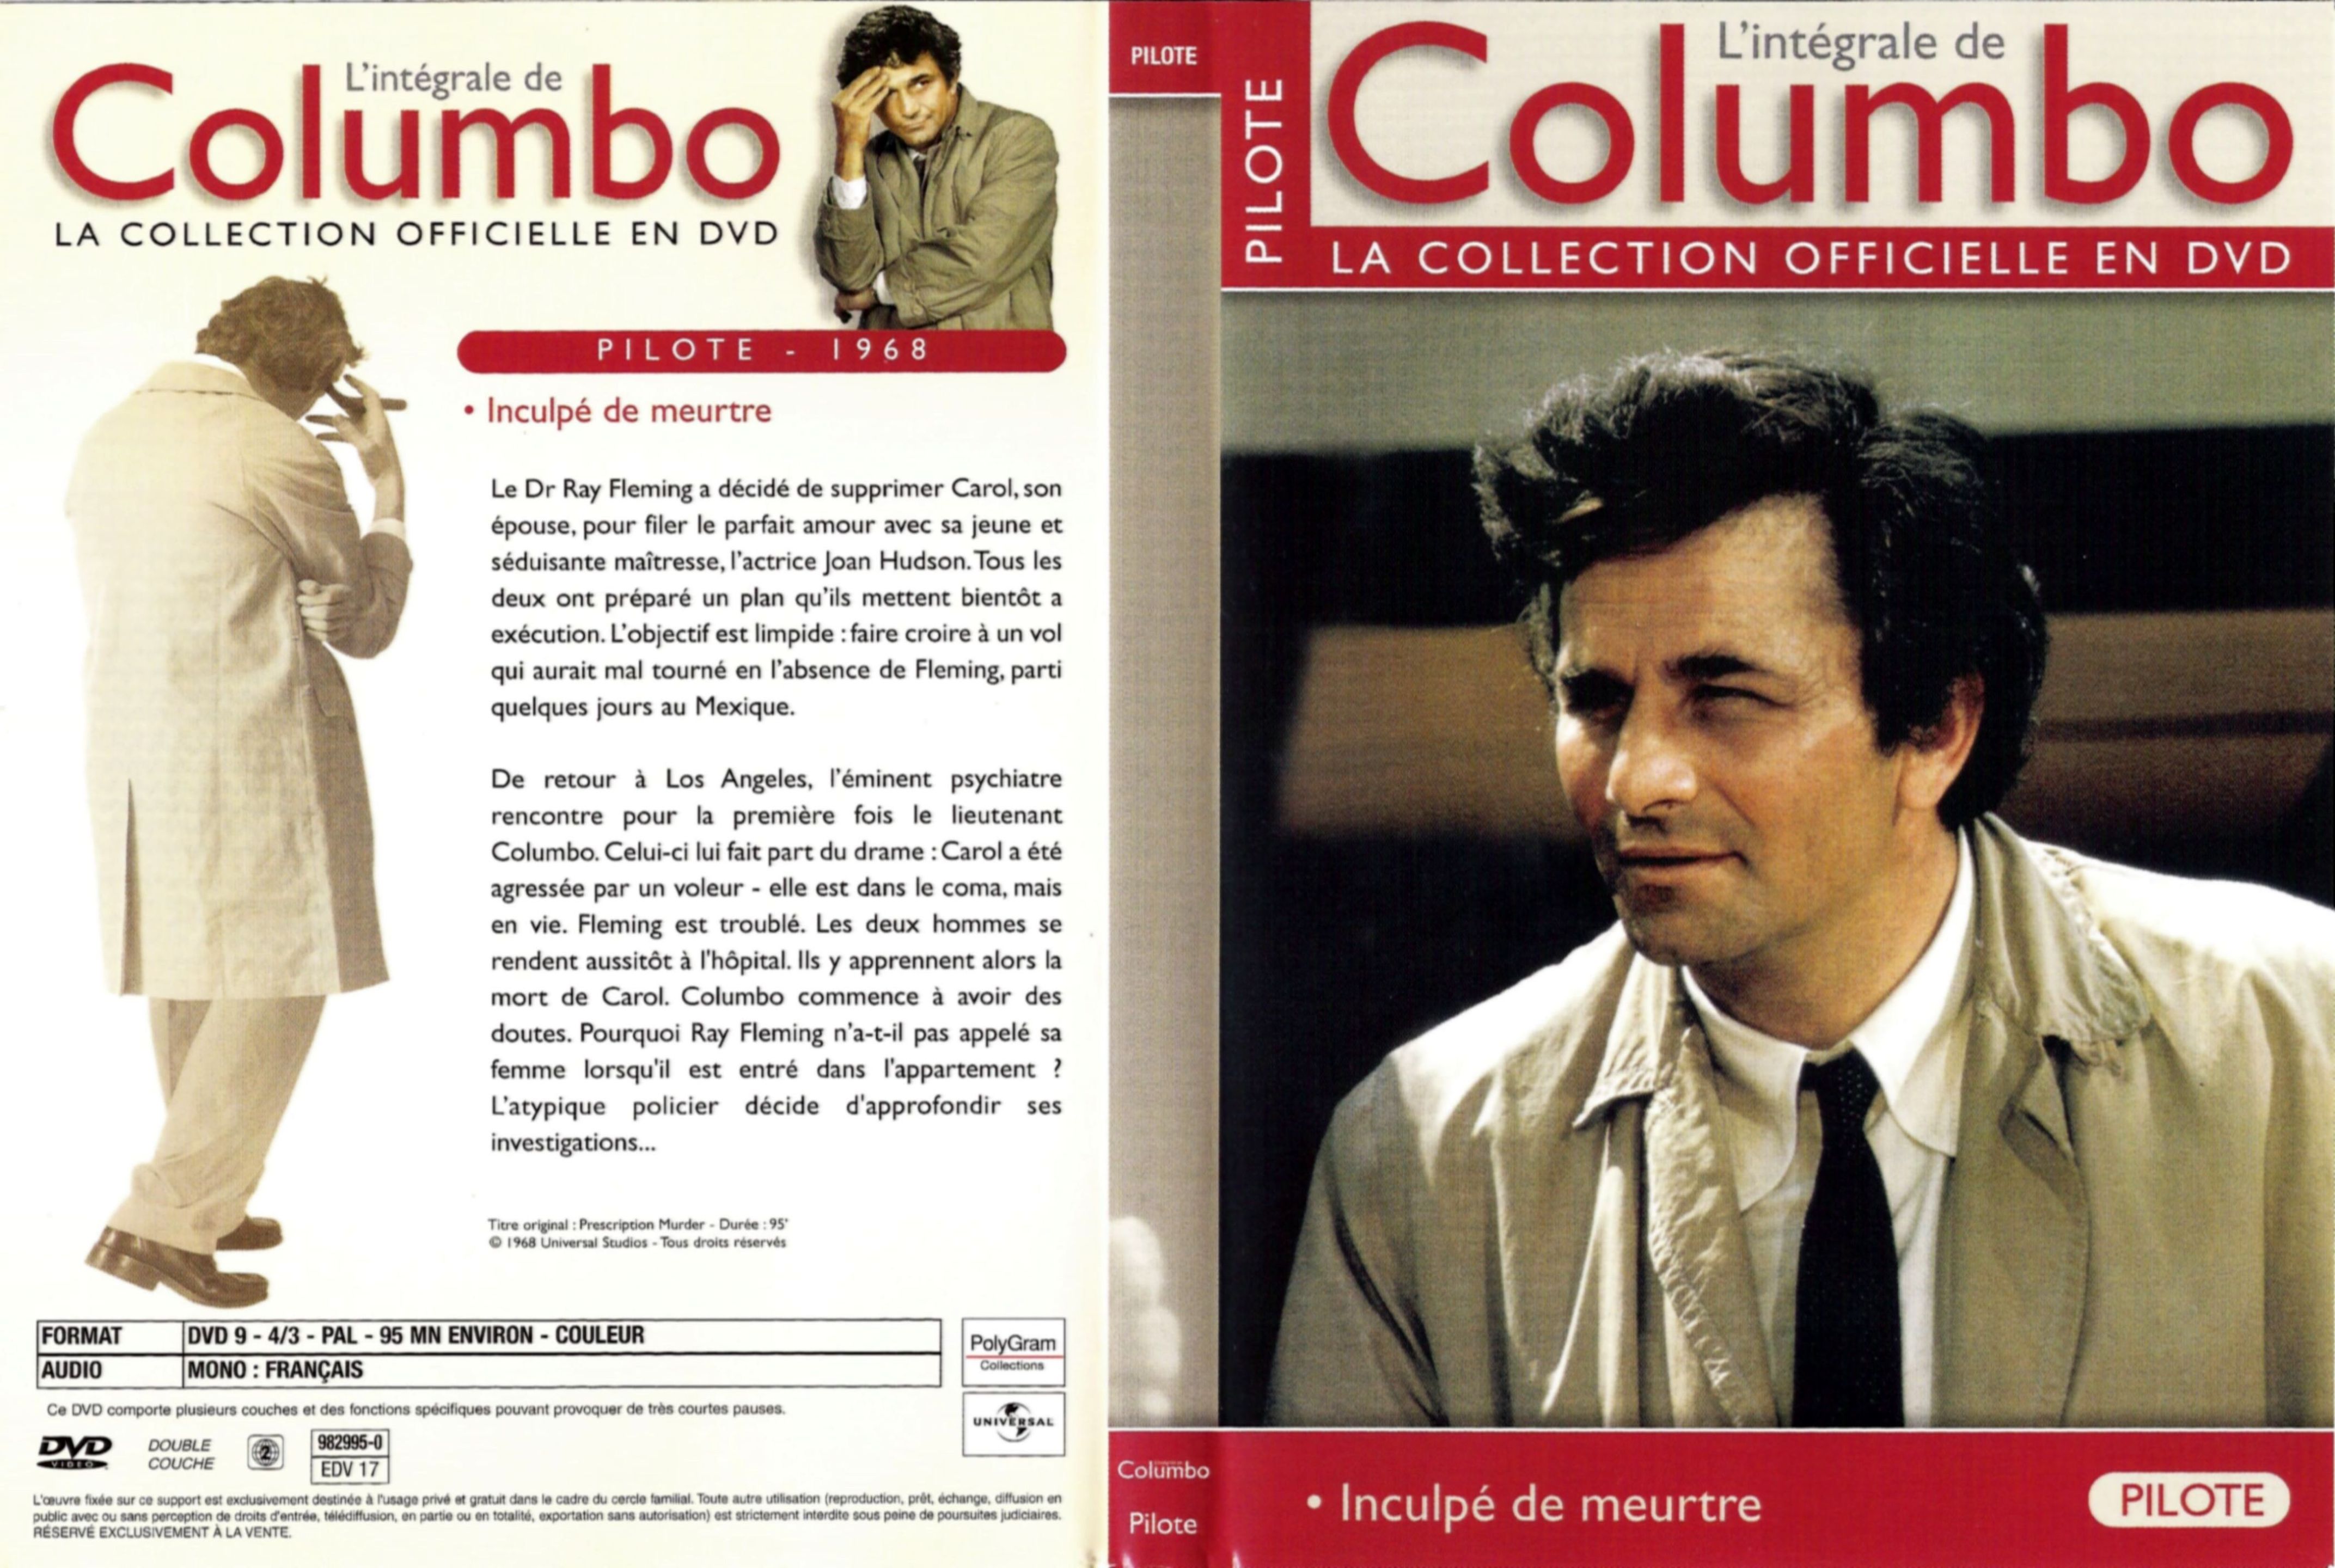 Jaquette DVD Columbo pilote